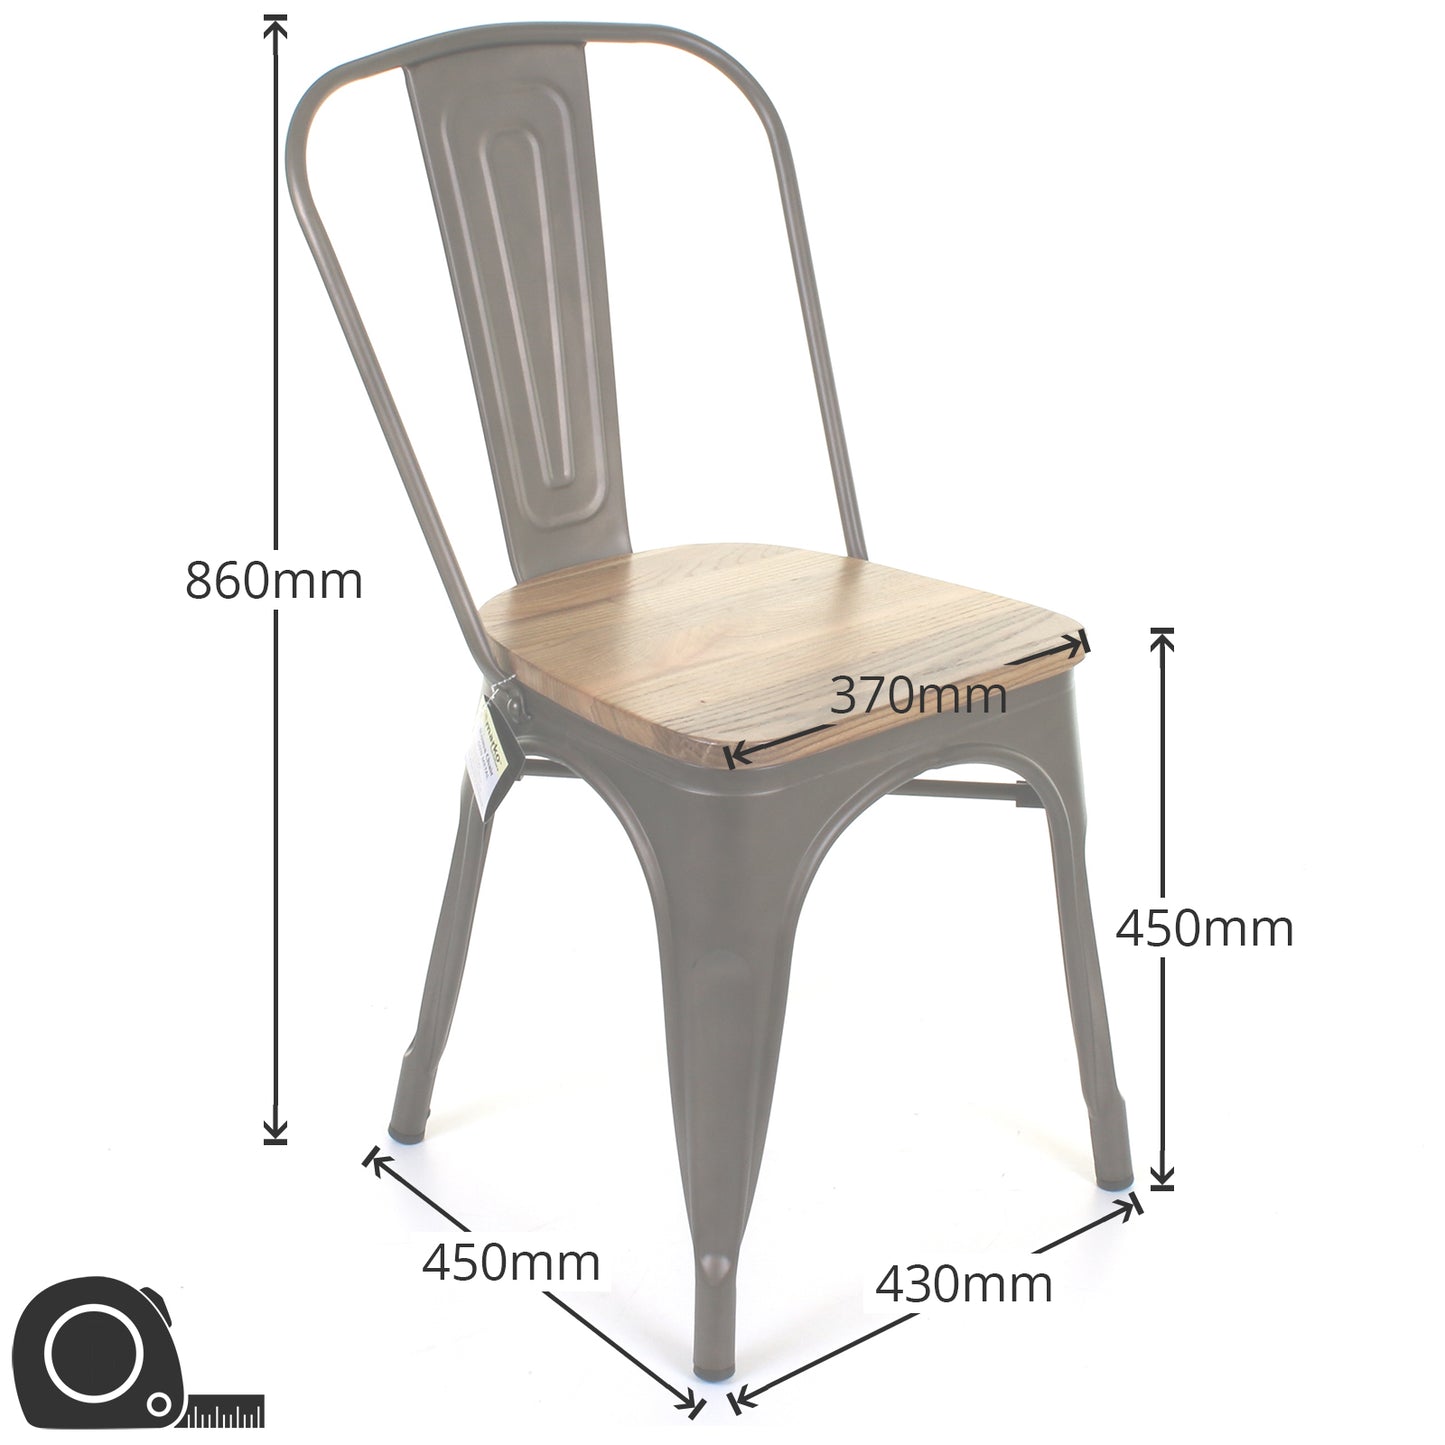 7PC Taranto Table, 2 Florence Chairs, 3 Palermo Chairs & Nuoro Bench Set - Gun Metal Grey